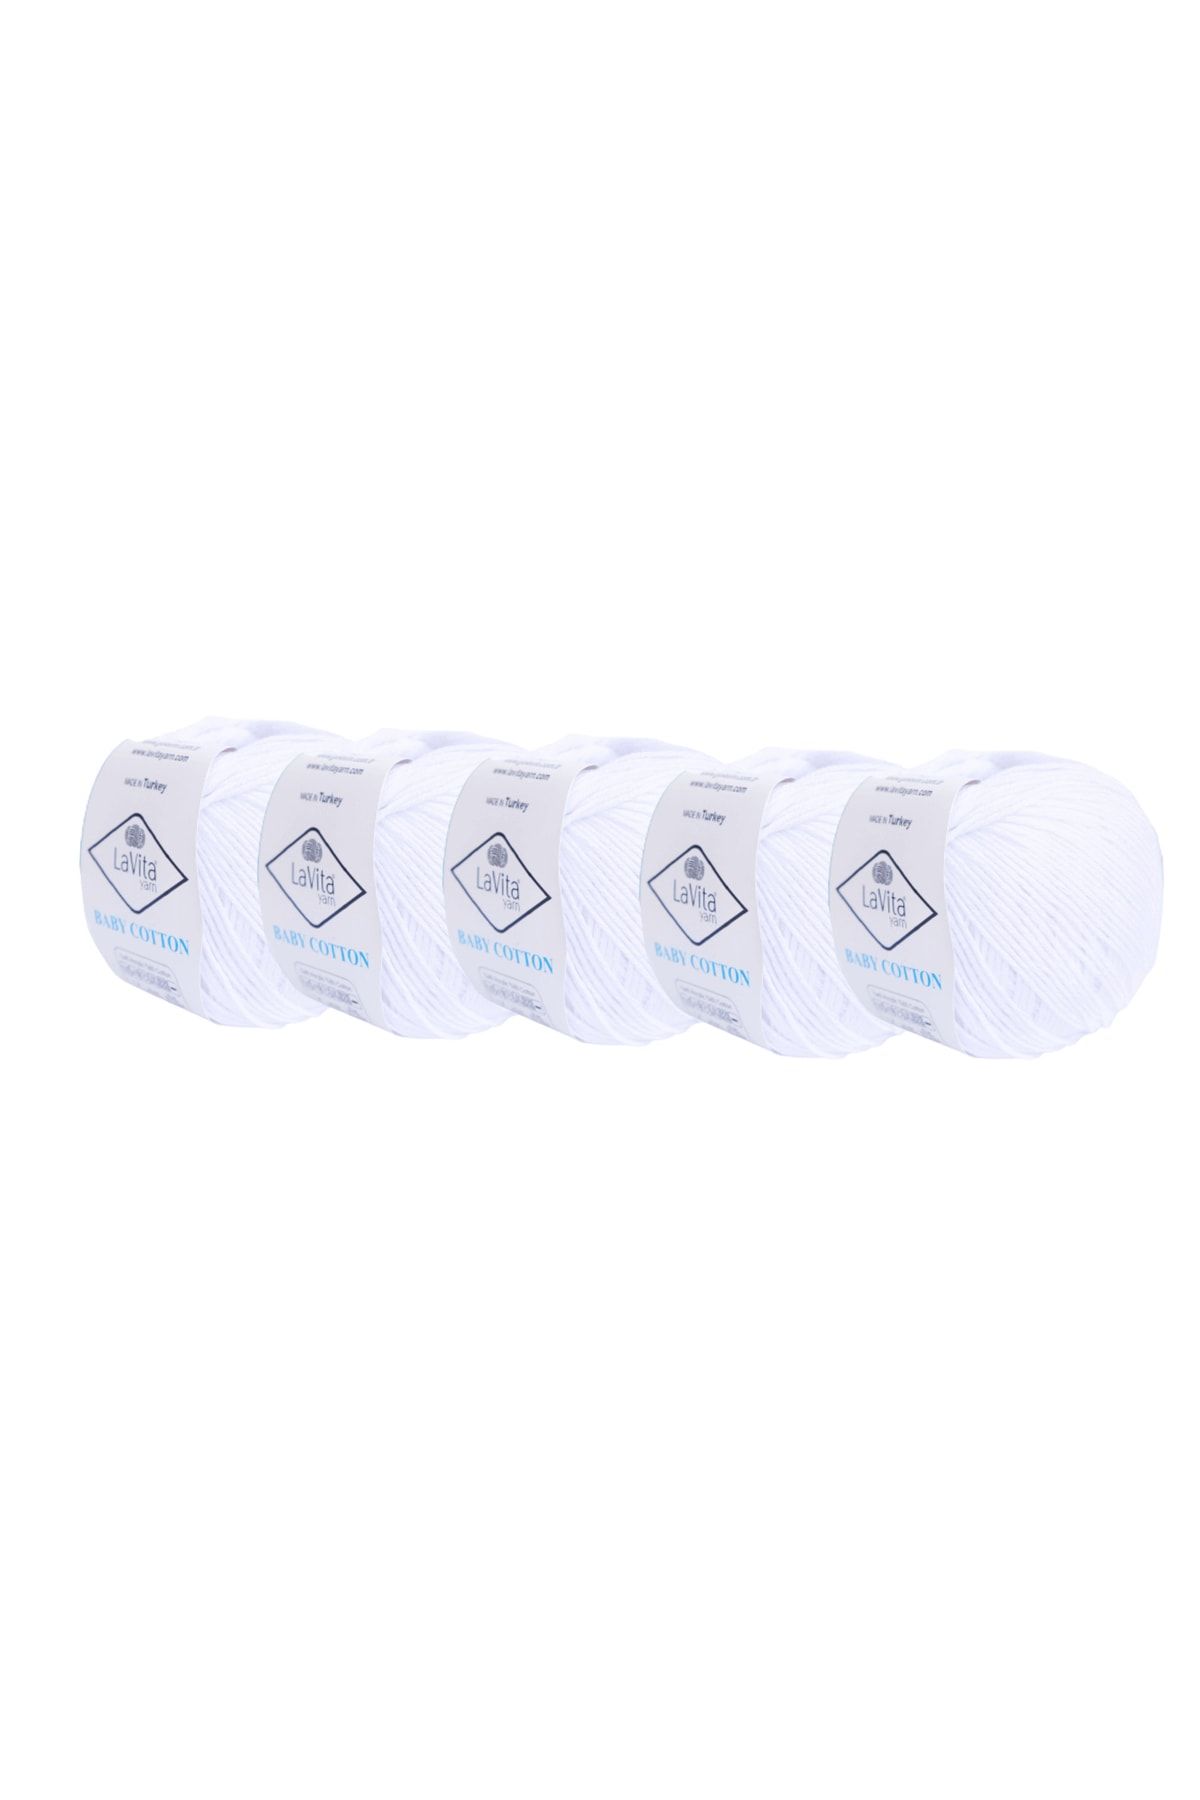 LaVita Yarn Baby Cotton 50 gr Amigurumi, Punch, El Örgü Ipligi, 5'li Paket Taka Yarn (OPTİK-1002)